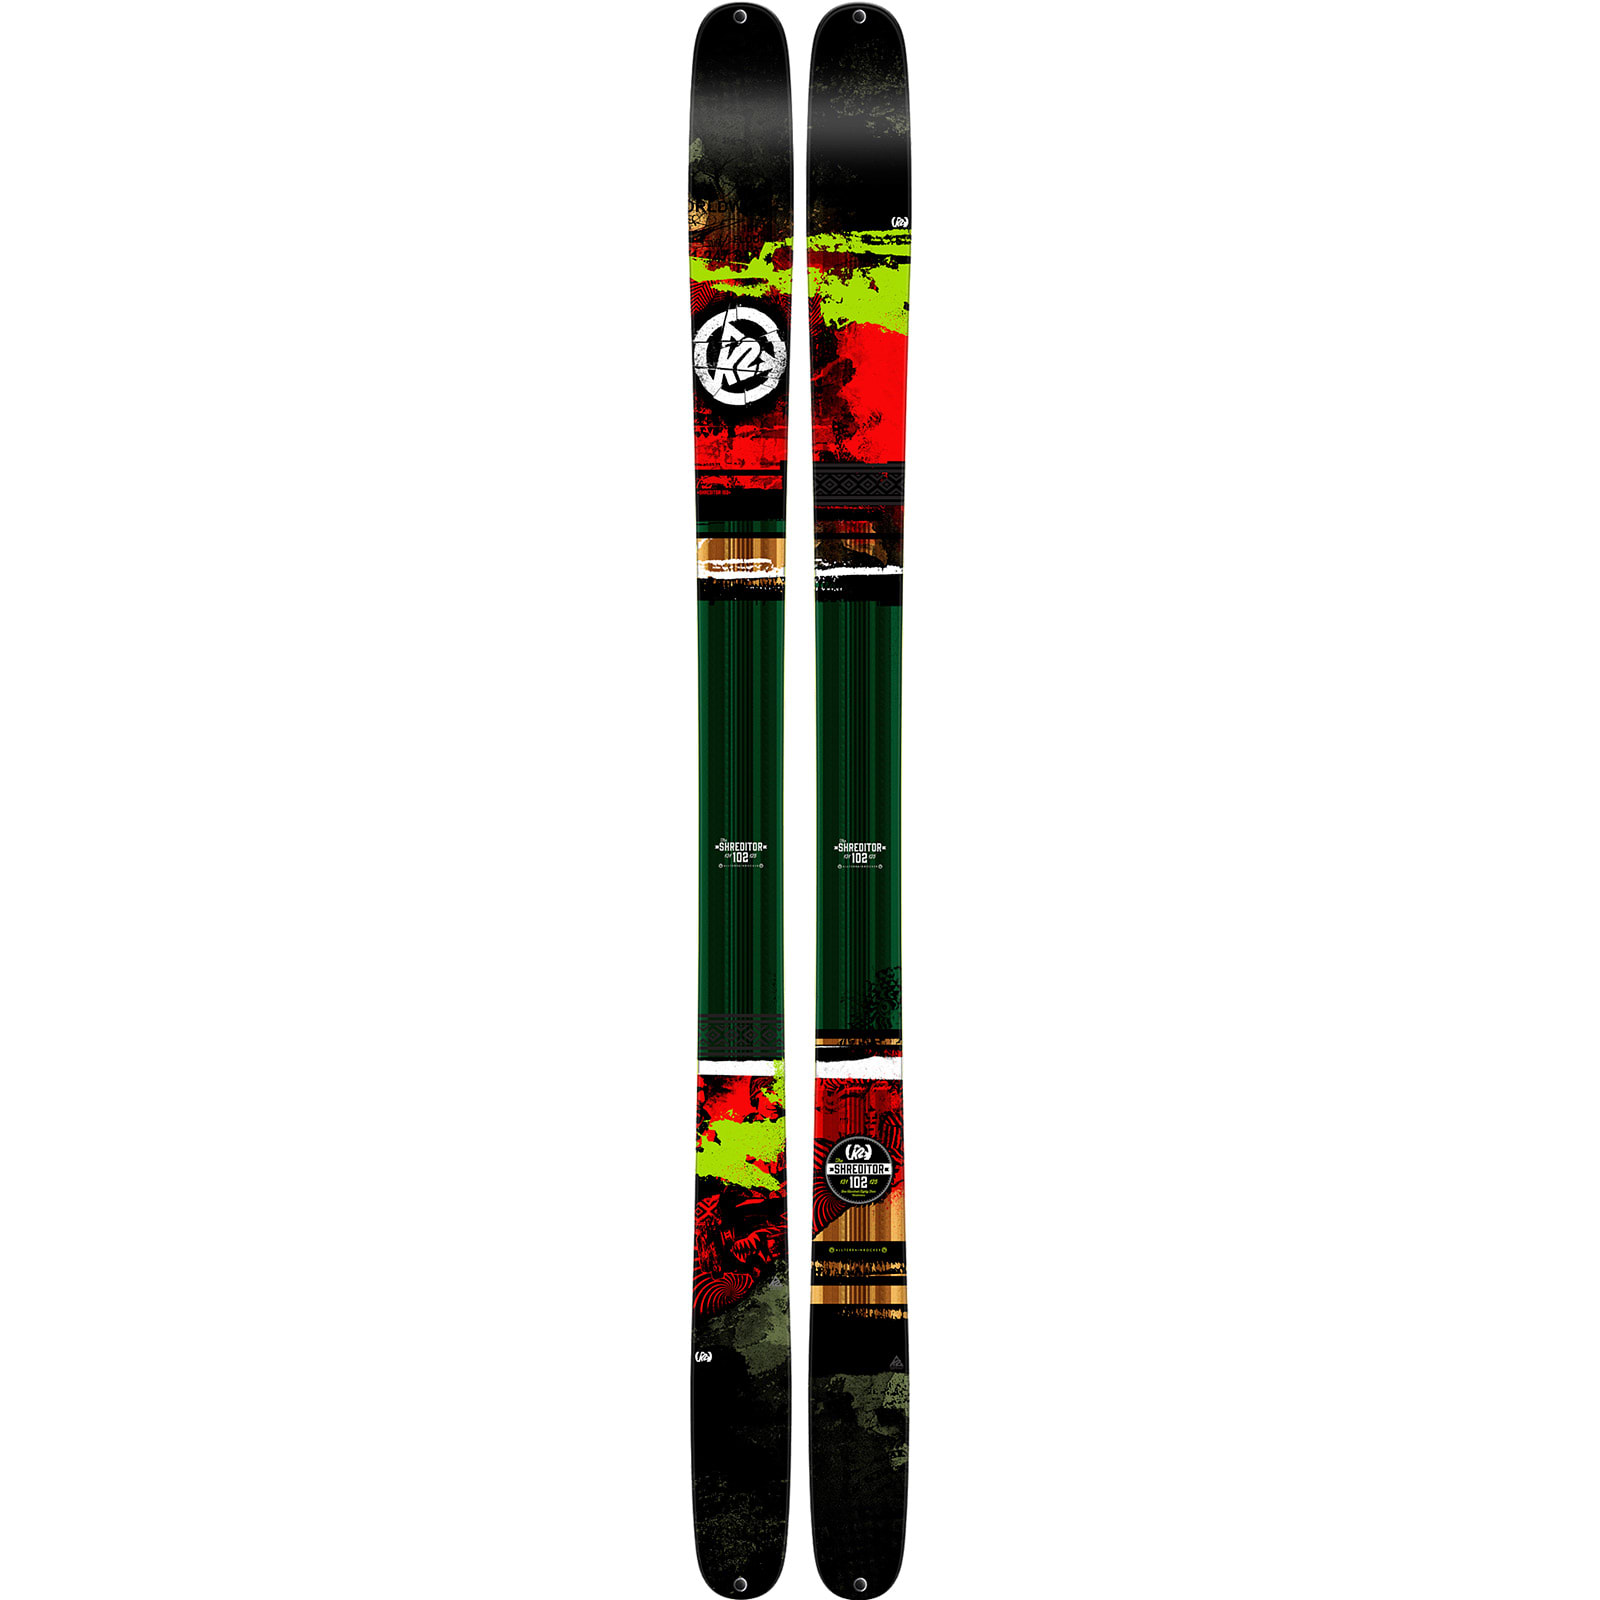 Köp K2 Skis Shreditor 102 hos Outnorth